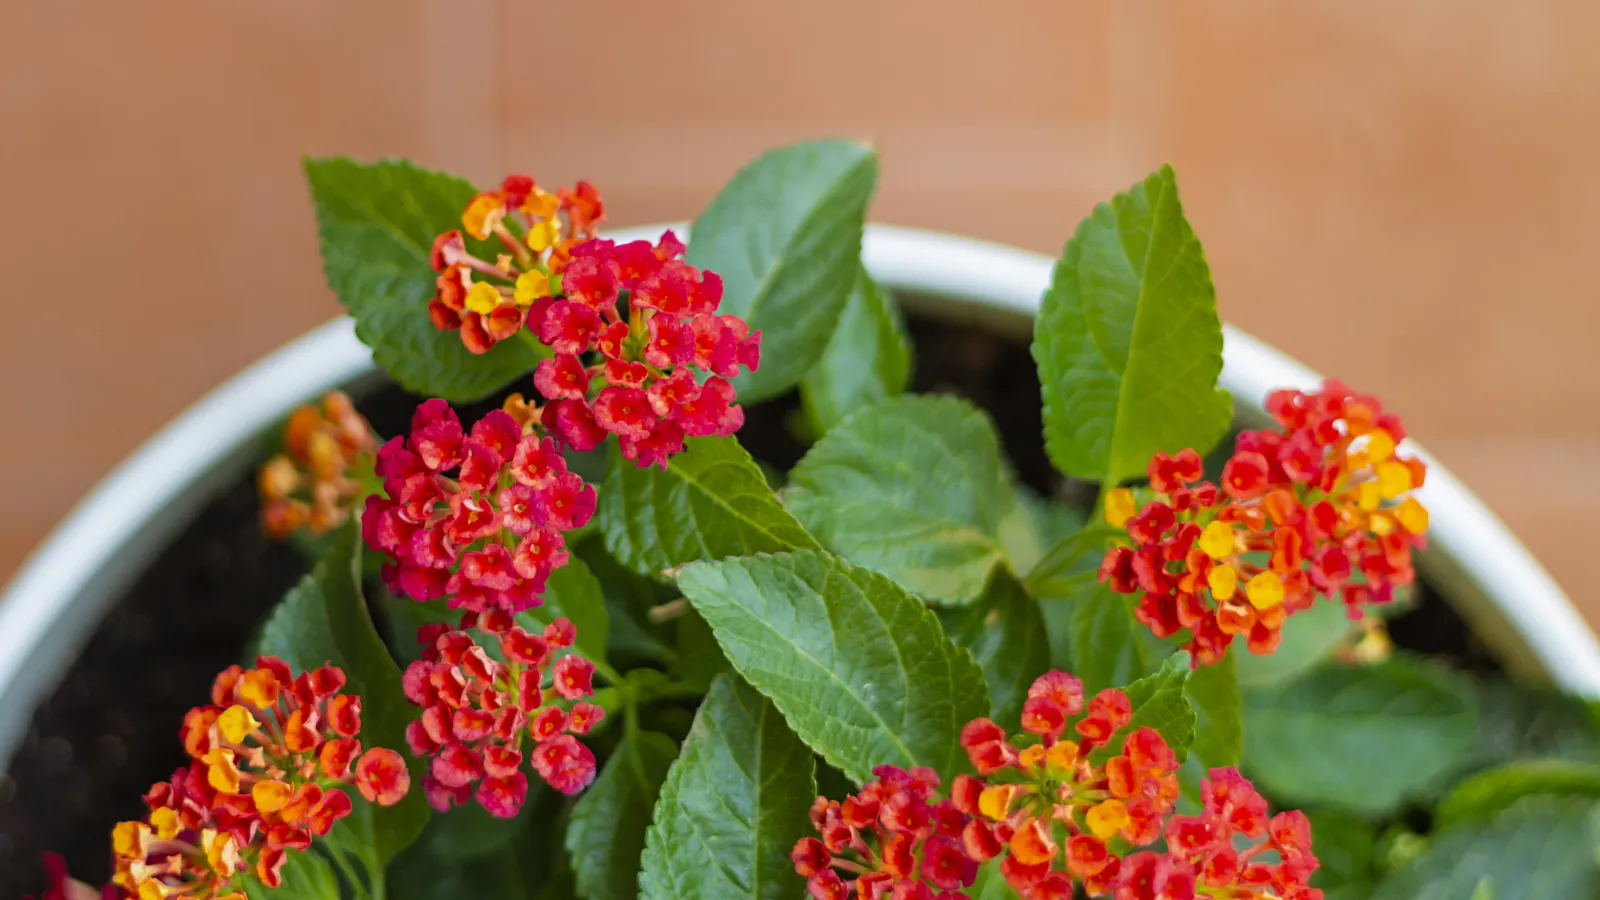 drought tolerant, pollinator plant red lantana in a white pot